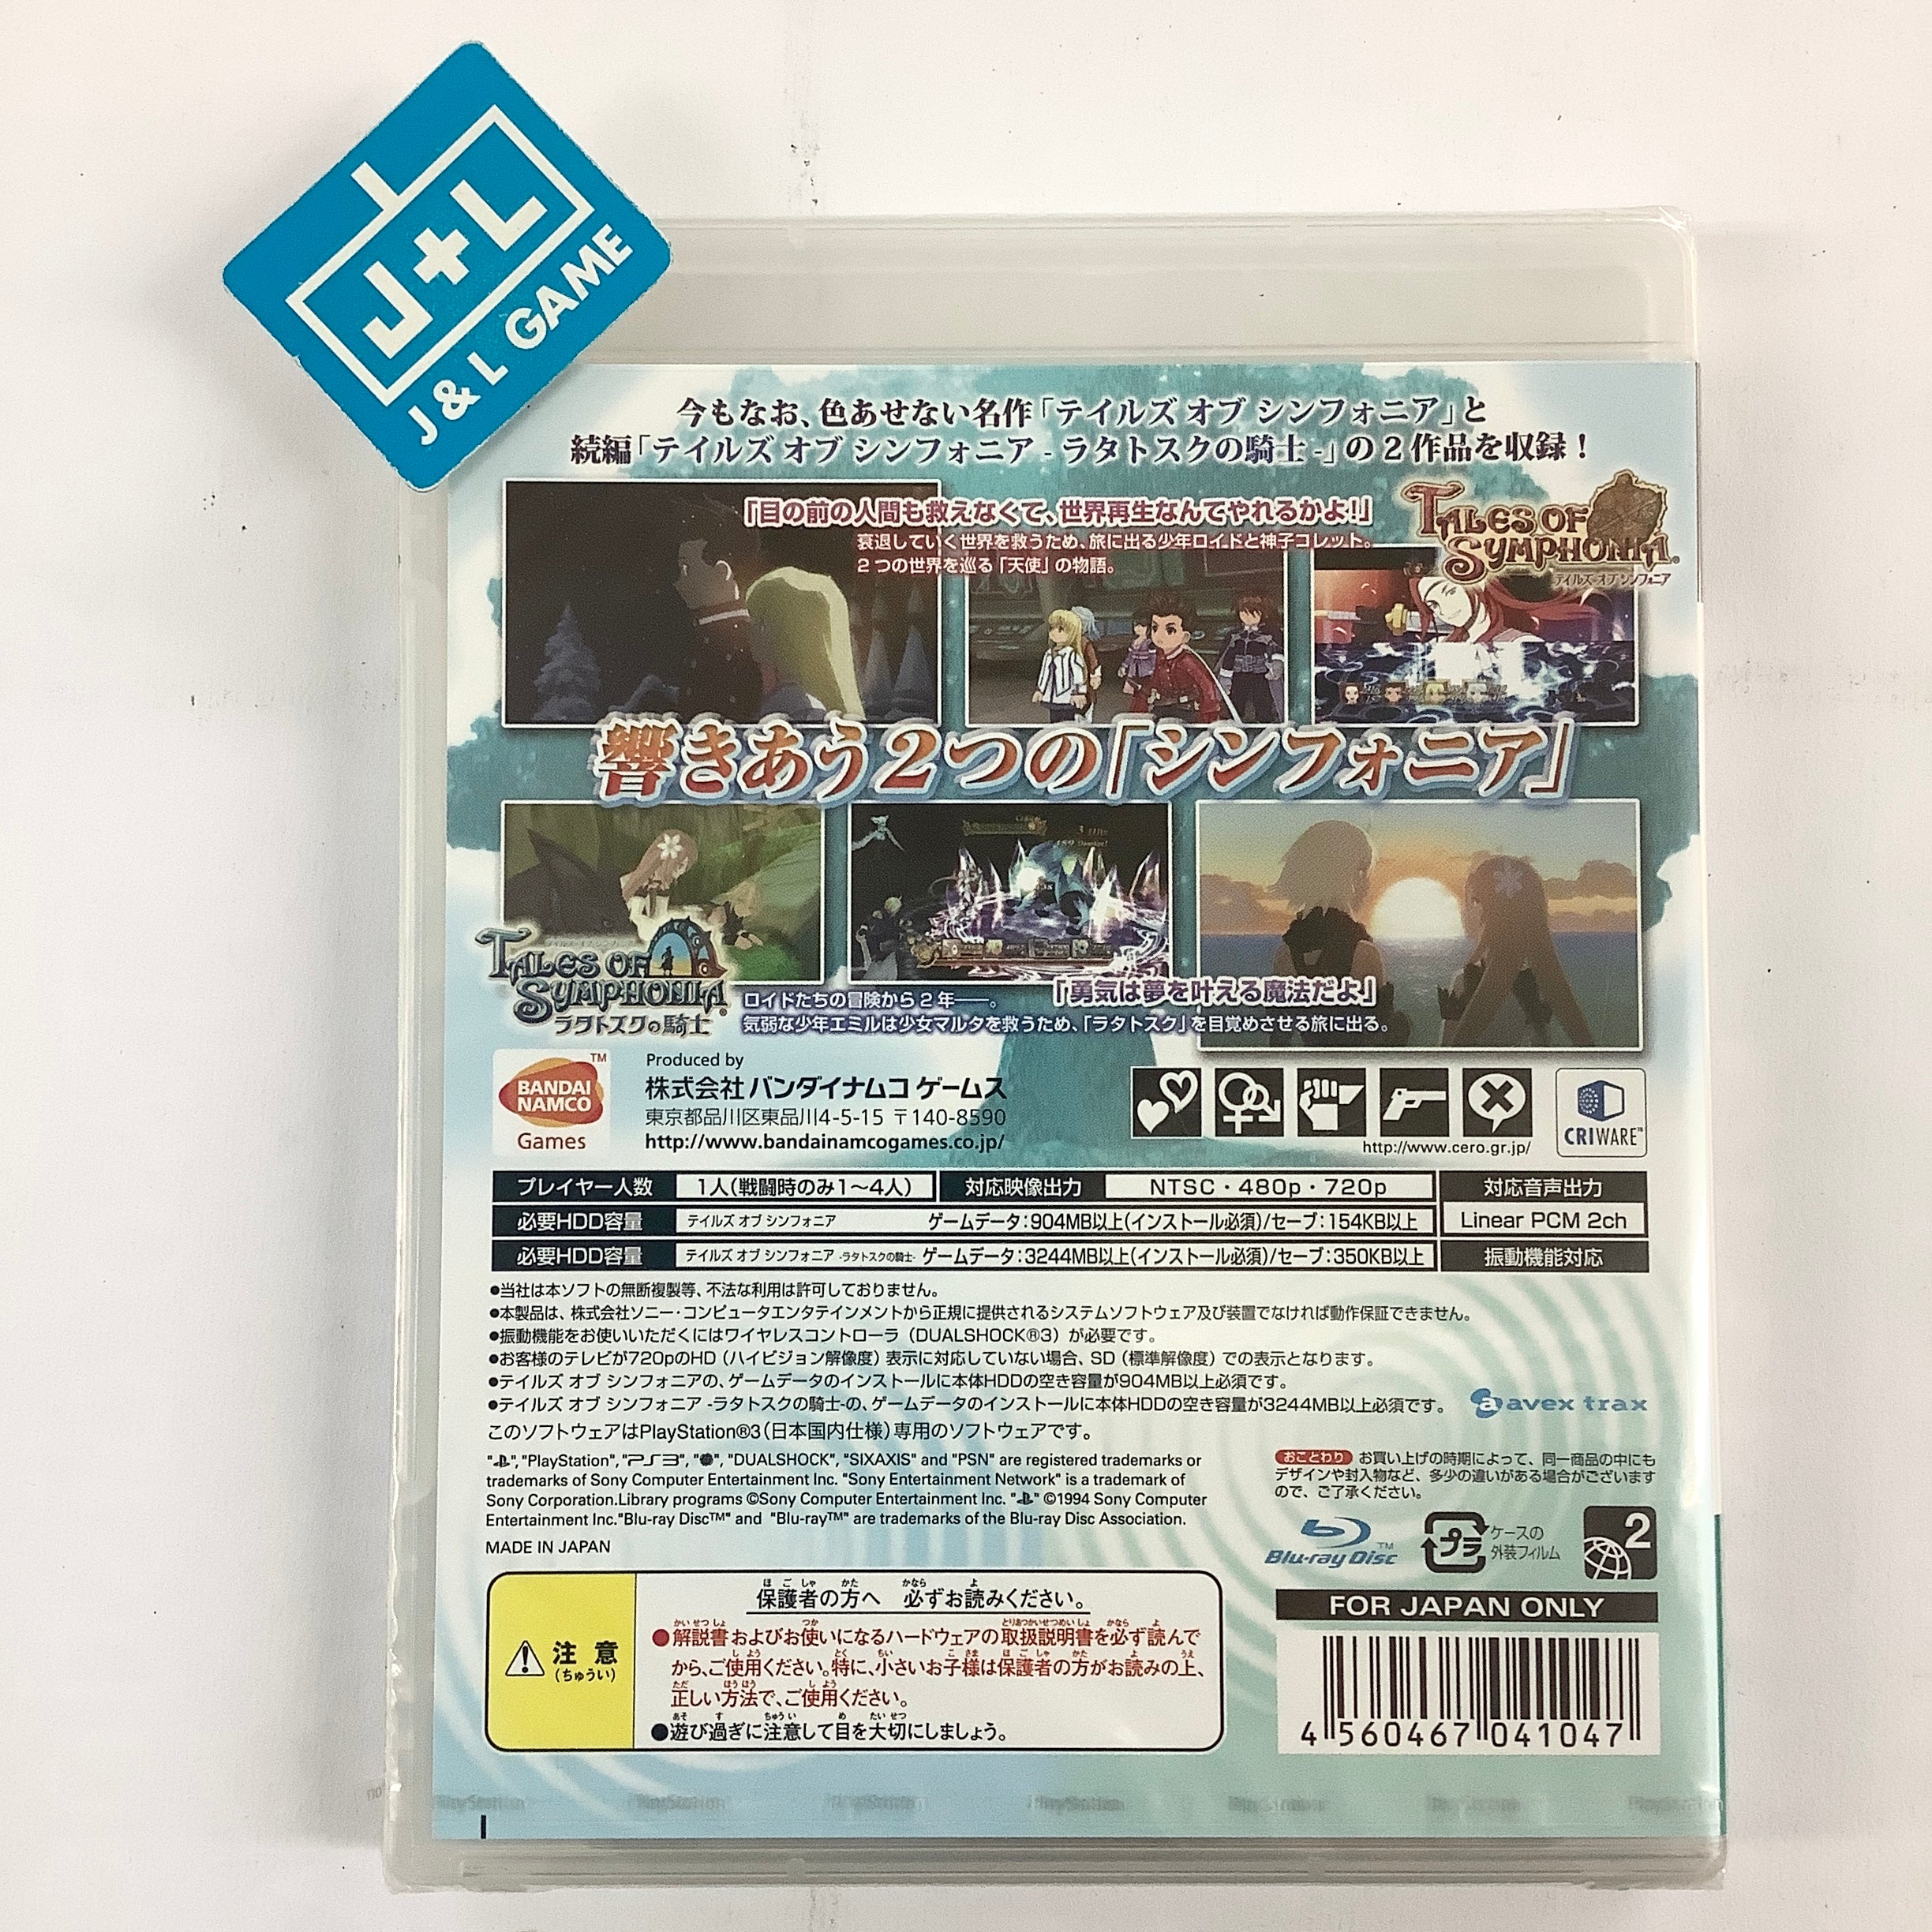 Tales of Symphonia: Unisonant Pack - (PS3) PlayStation 3 (Japanese Import) Video Games Bandai Namco Games   